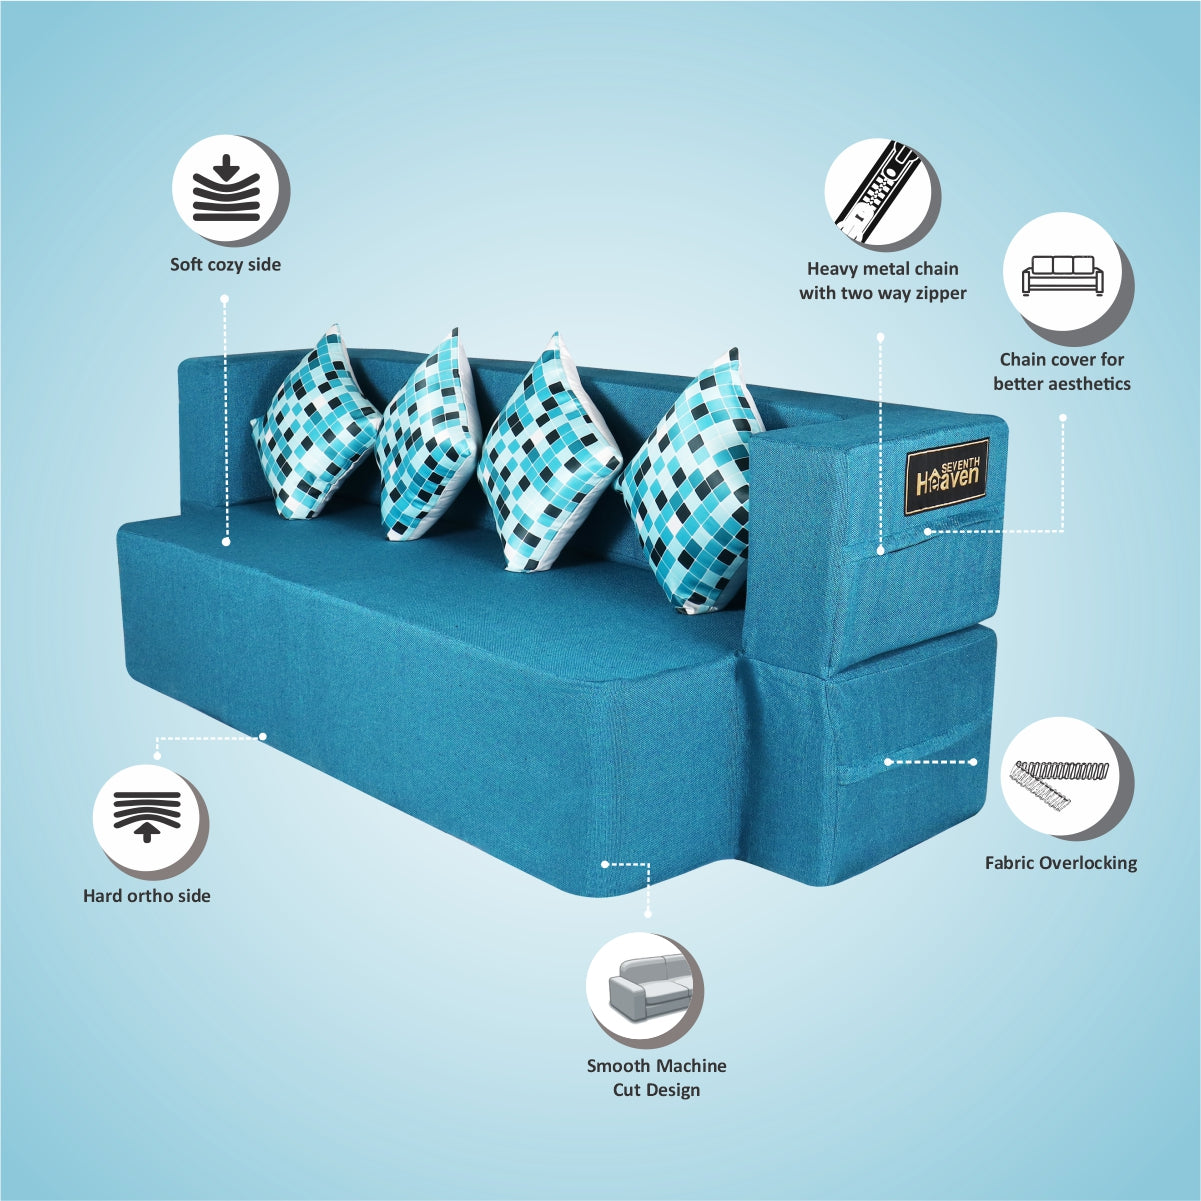 Blue Jute Fabric (78"x36"x14") FlipperX Sofa cum Bed with 4 Printed Cushions